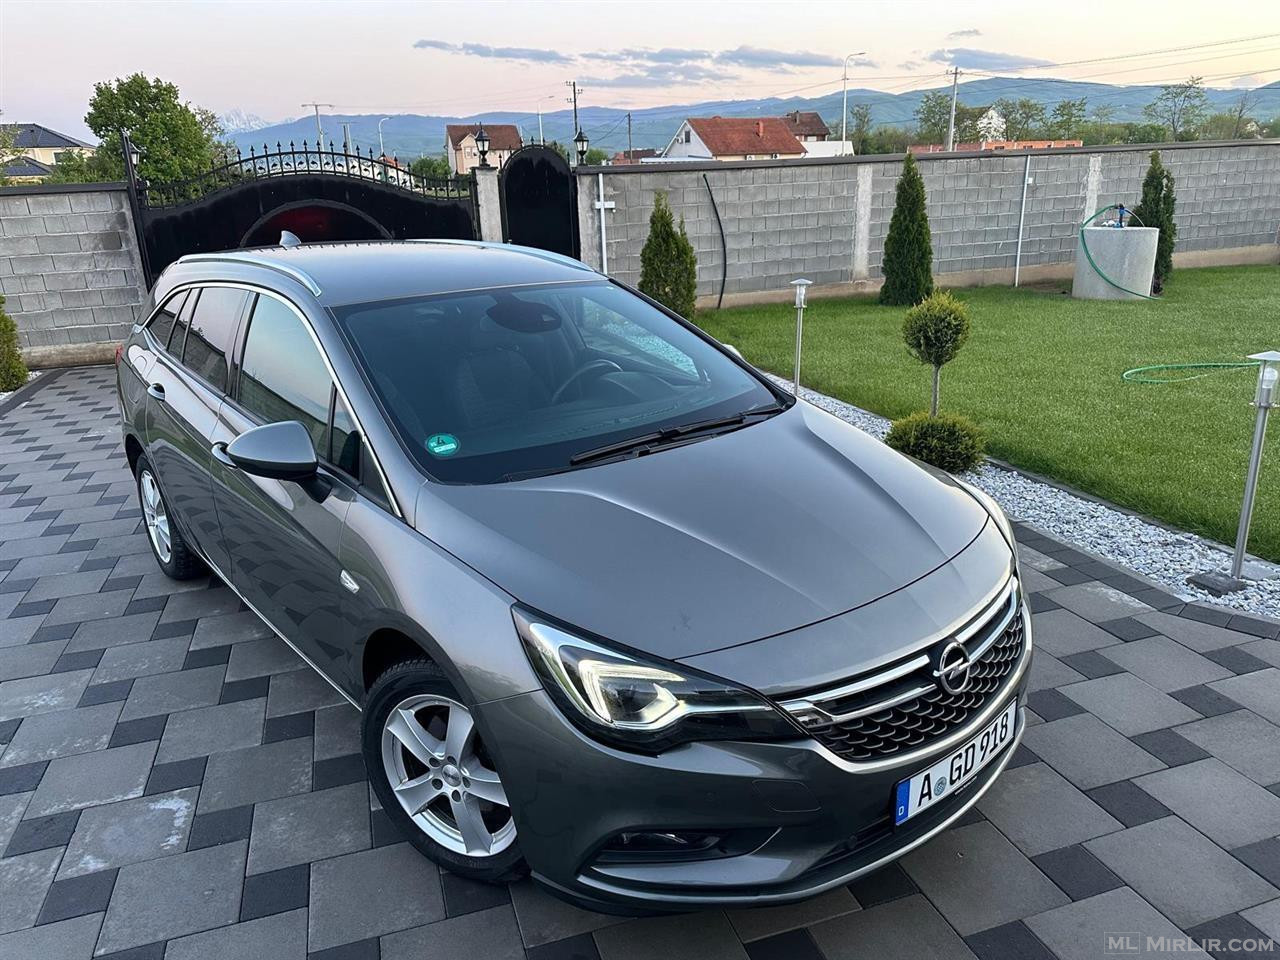 Opel astra k 1.6 dizell 2017 160ps biturbo????